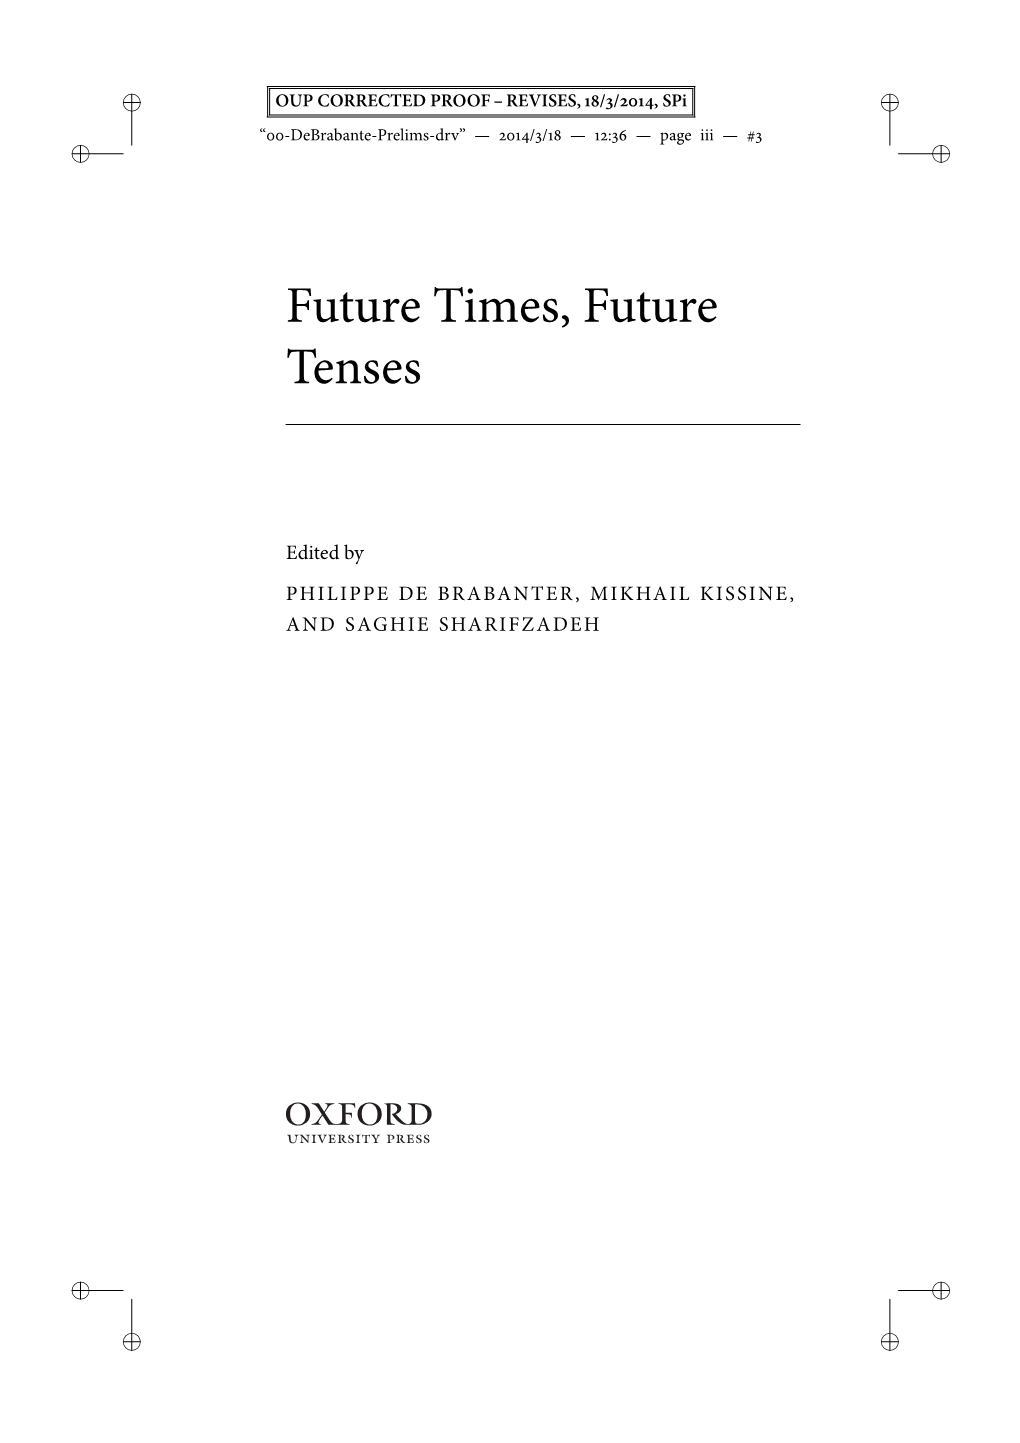 Future Times, Future Tenses 1